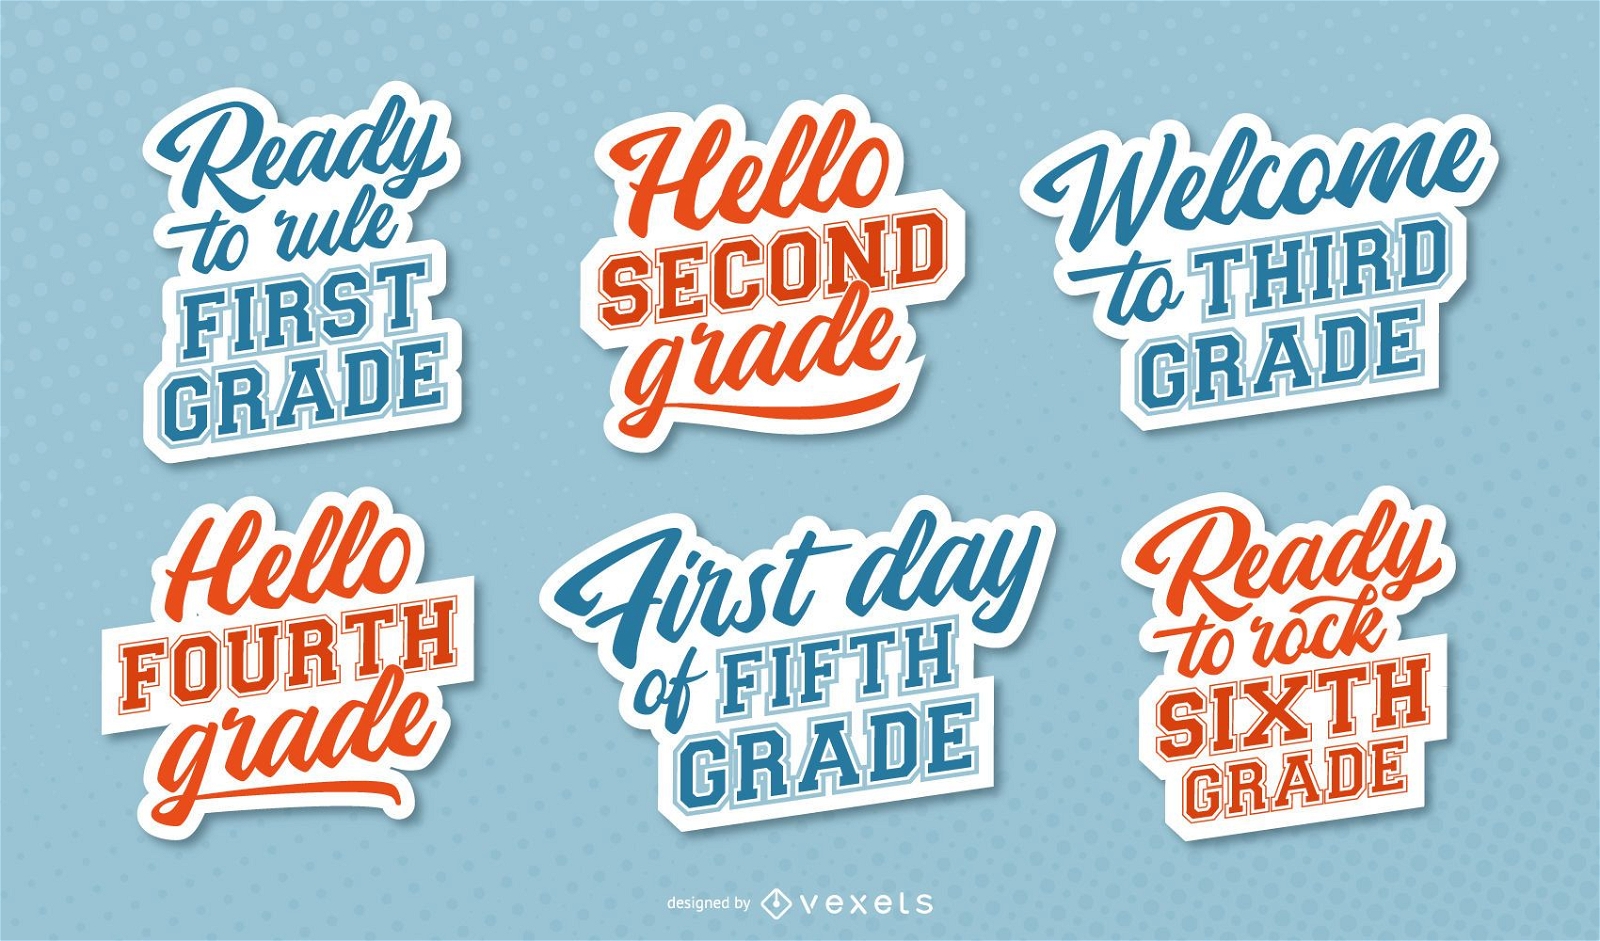 School grades lettering set